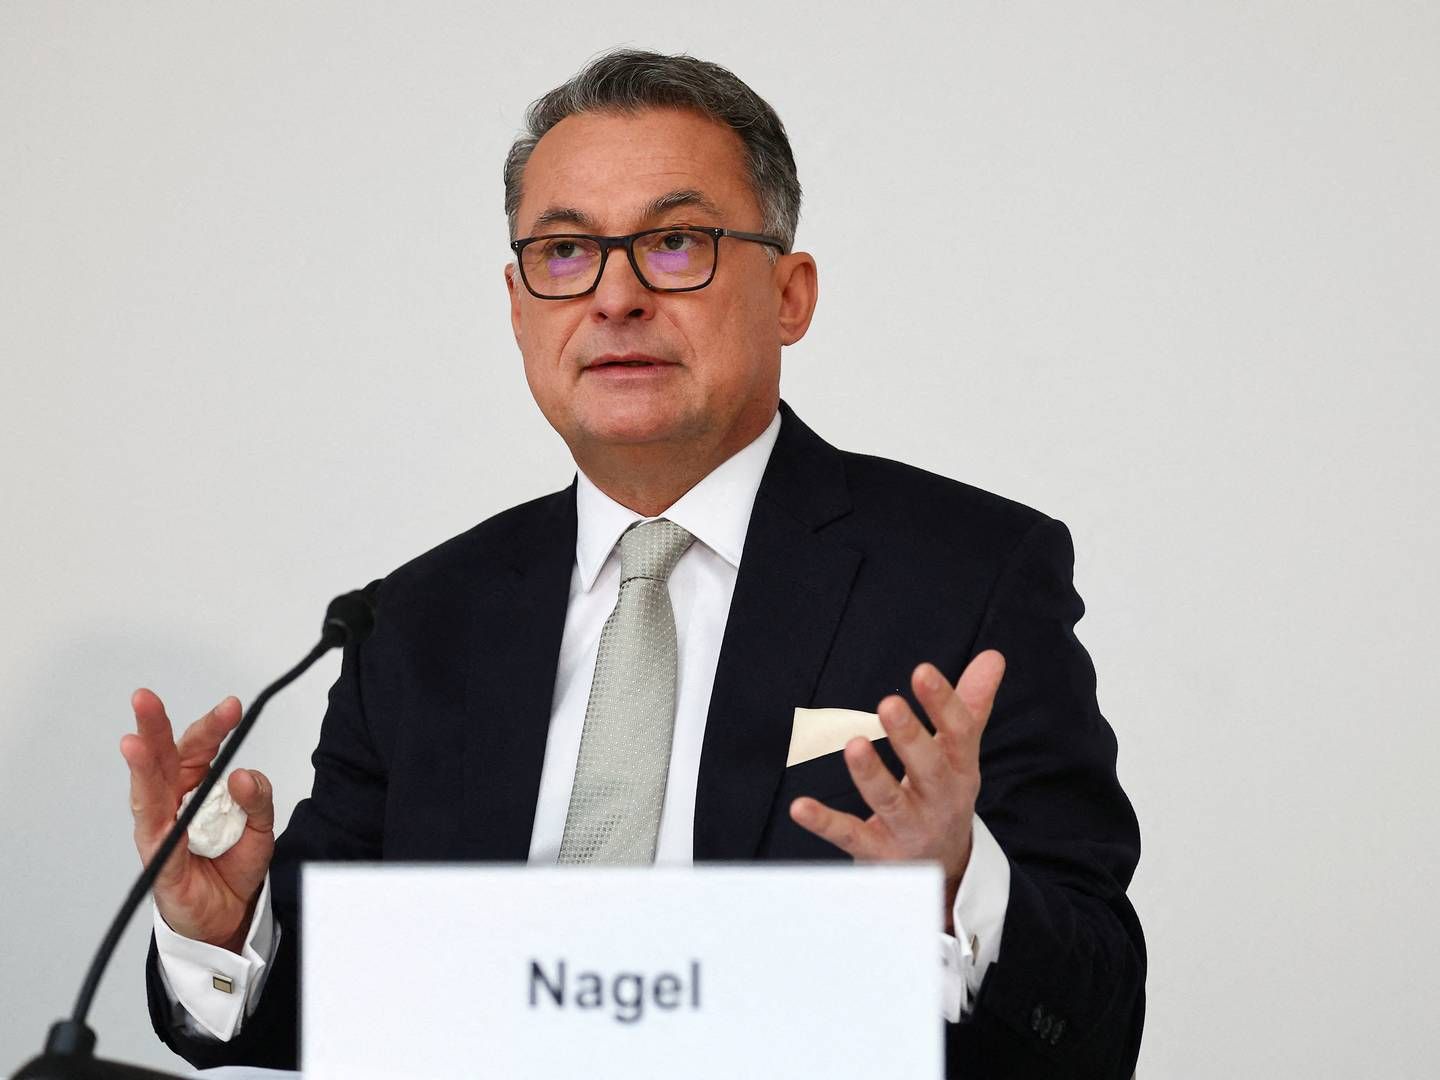 Joachim Nagel er chef for den tyske centralbank. | Foto: Kai Pfaffenbach/Reuters/Ritzau Scanpix